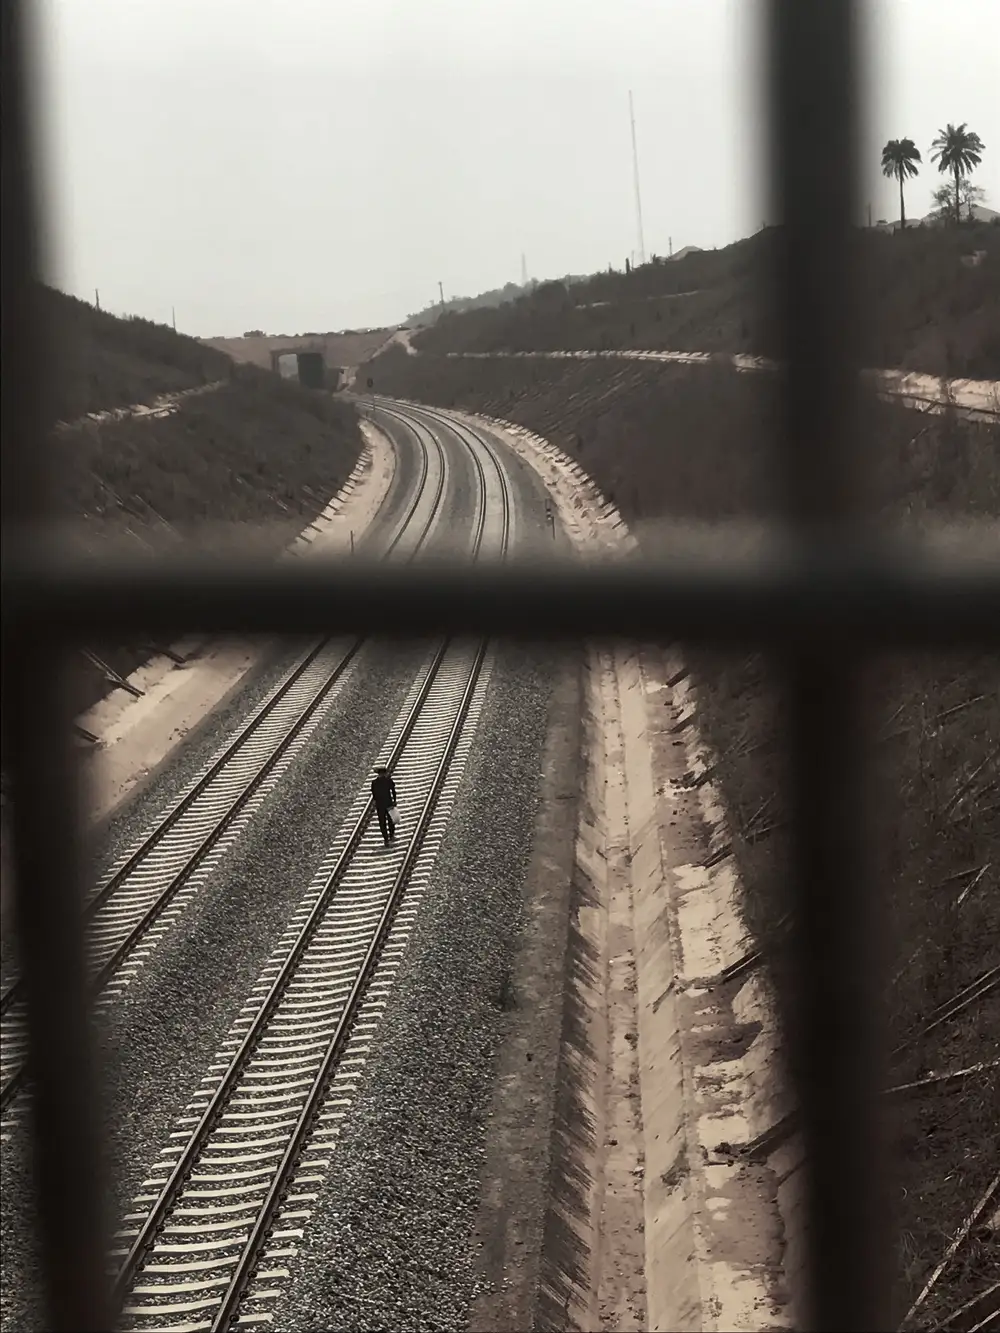 Man walking on a railway